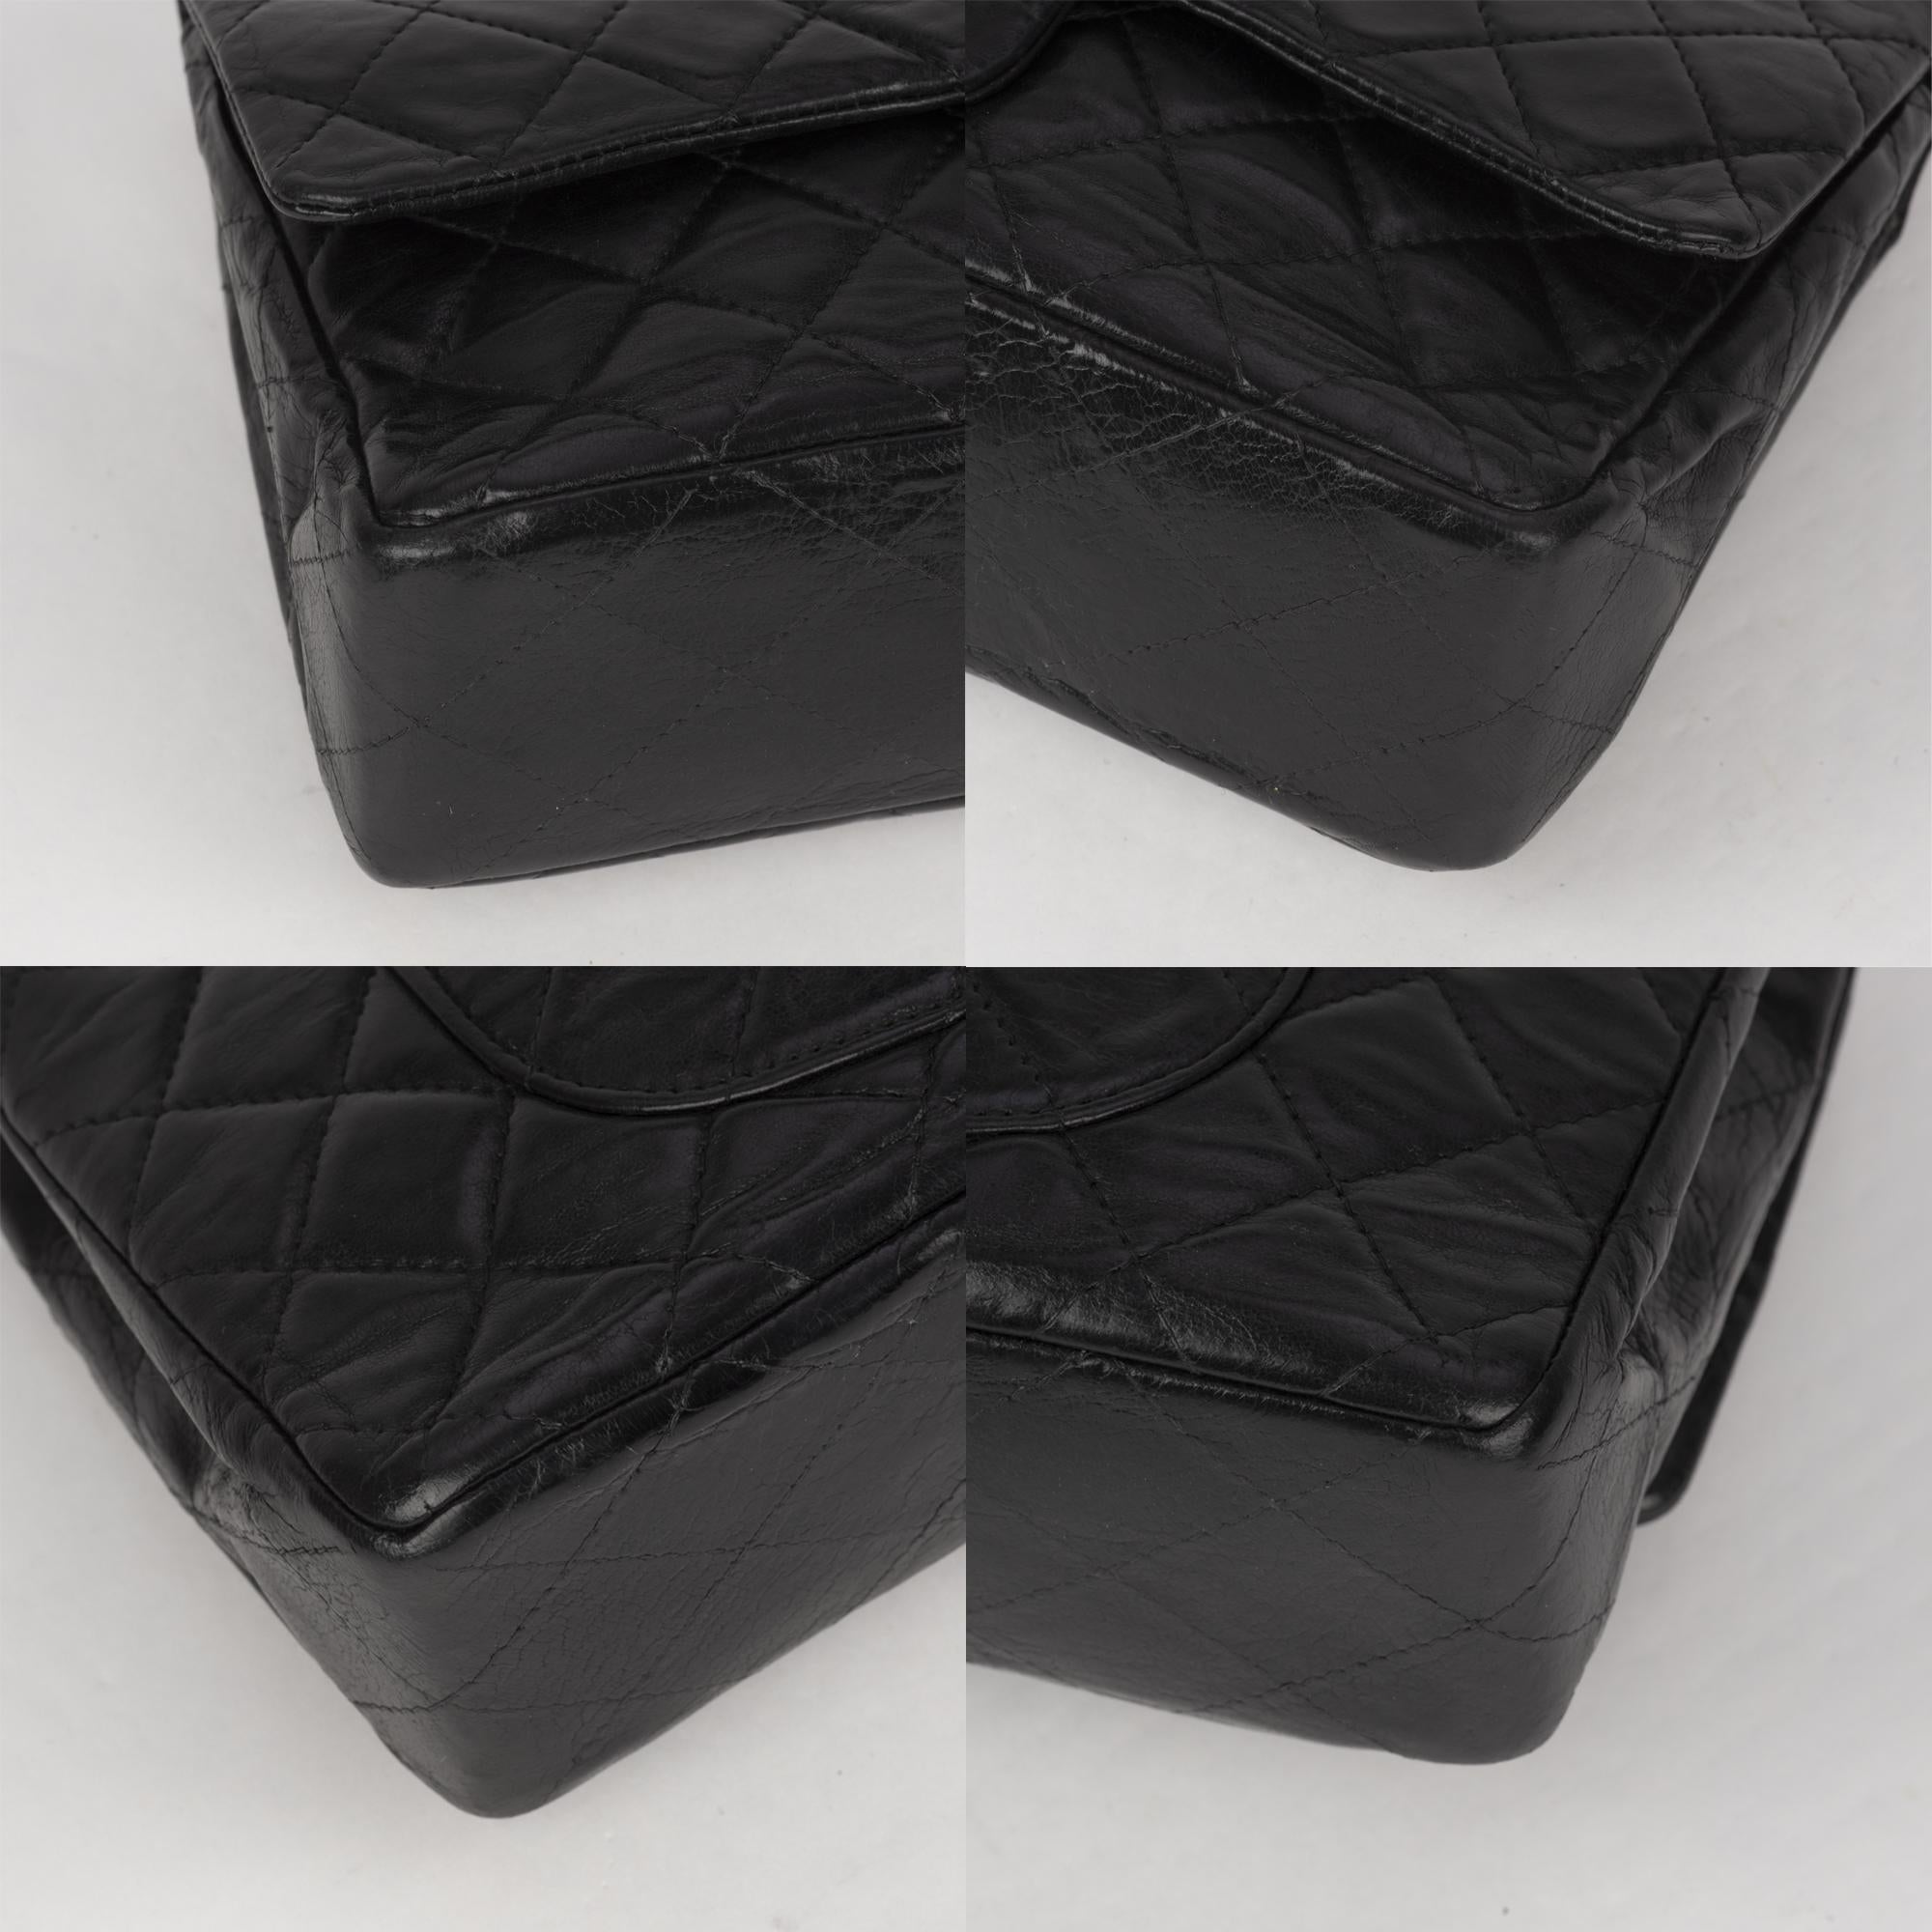 Handbag Chanel 2.55 in Black lambskin Leather ! 2